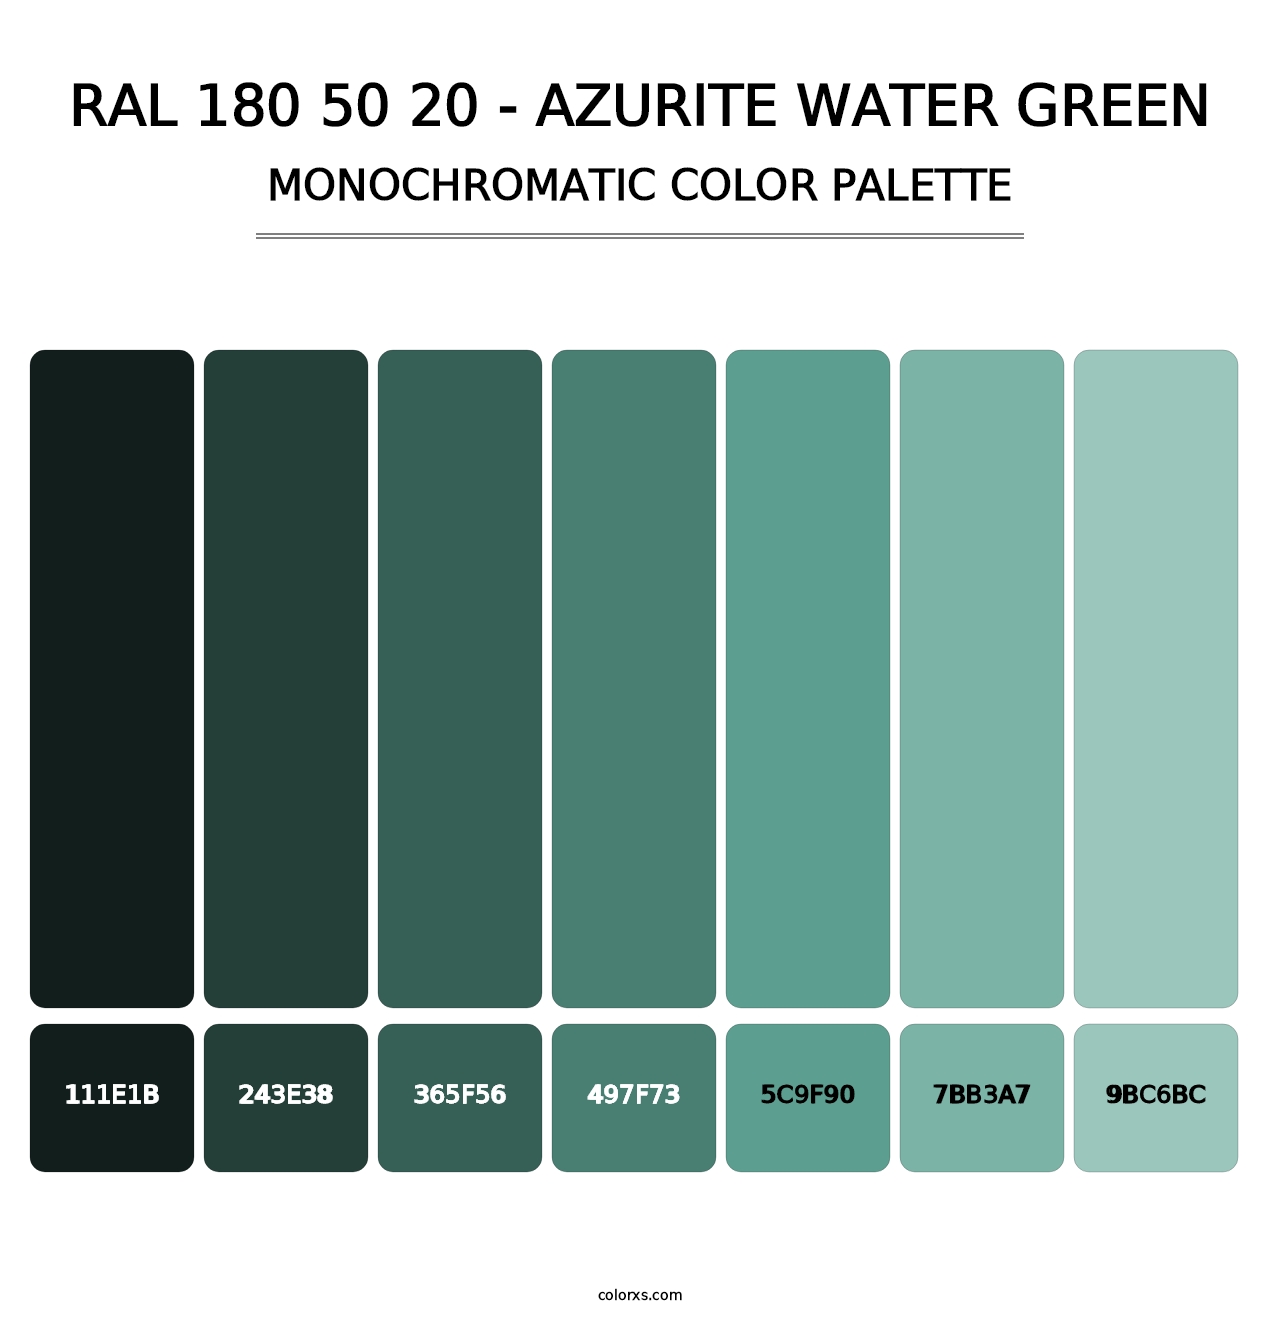 RAL 180 50 20 - Azurite Water Green - Monochromatic Color Palette